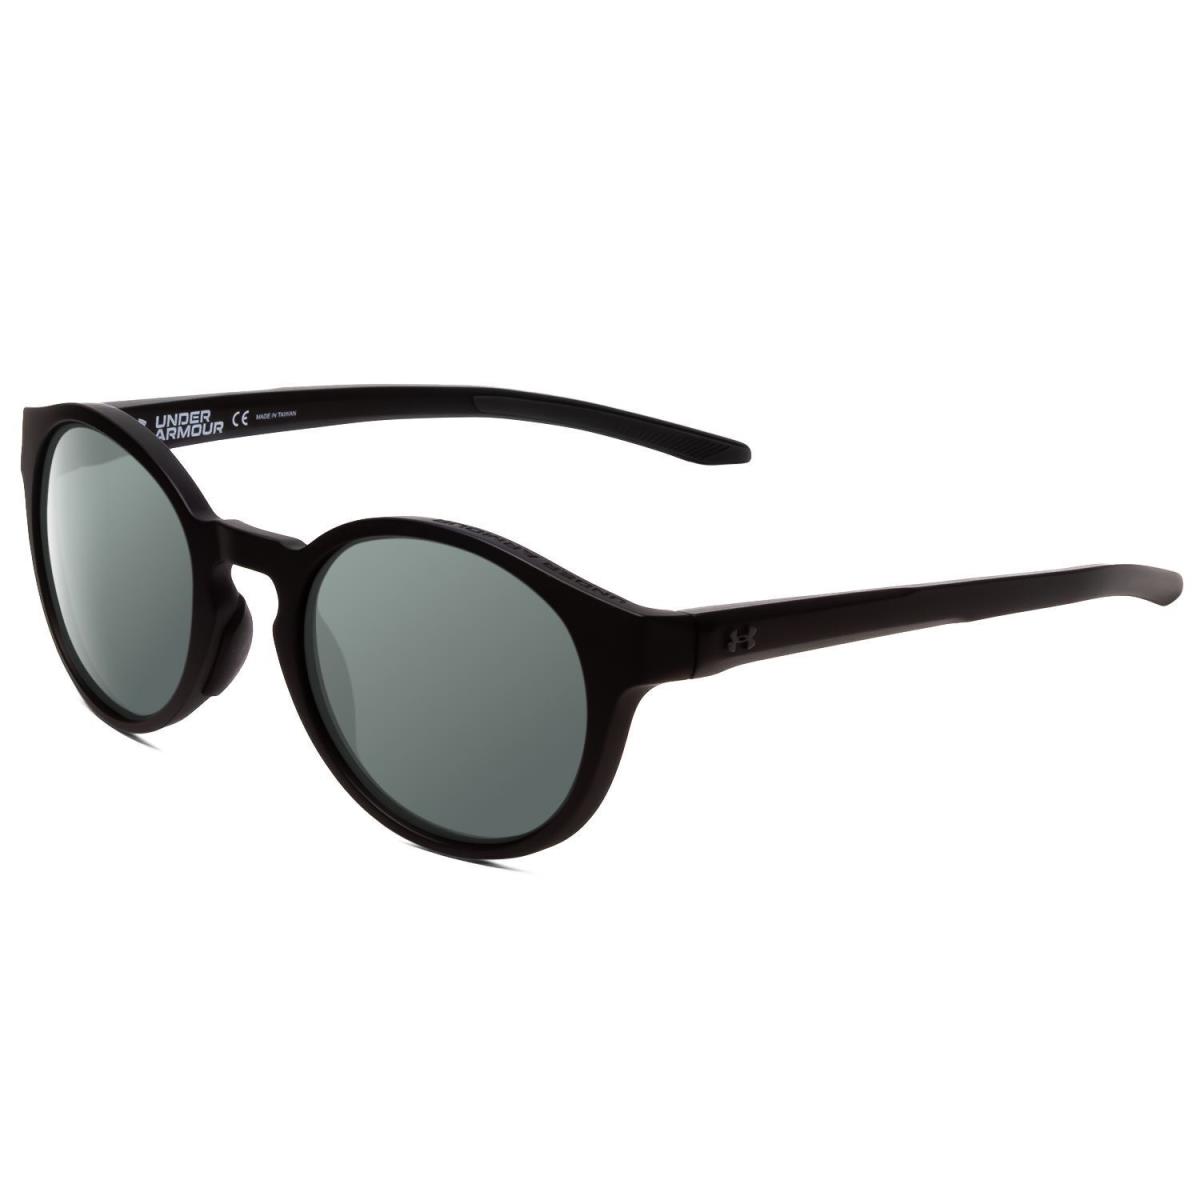 Under Armour Infinity Unisex Oval Polarized Sunglasses Black 52mm 4 Lens Options